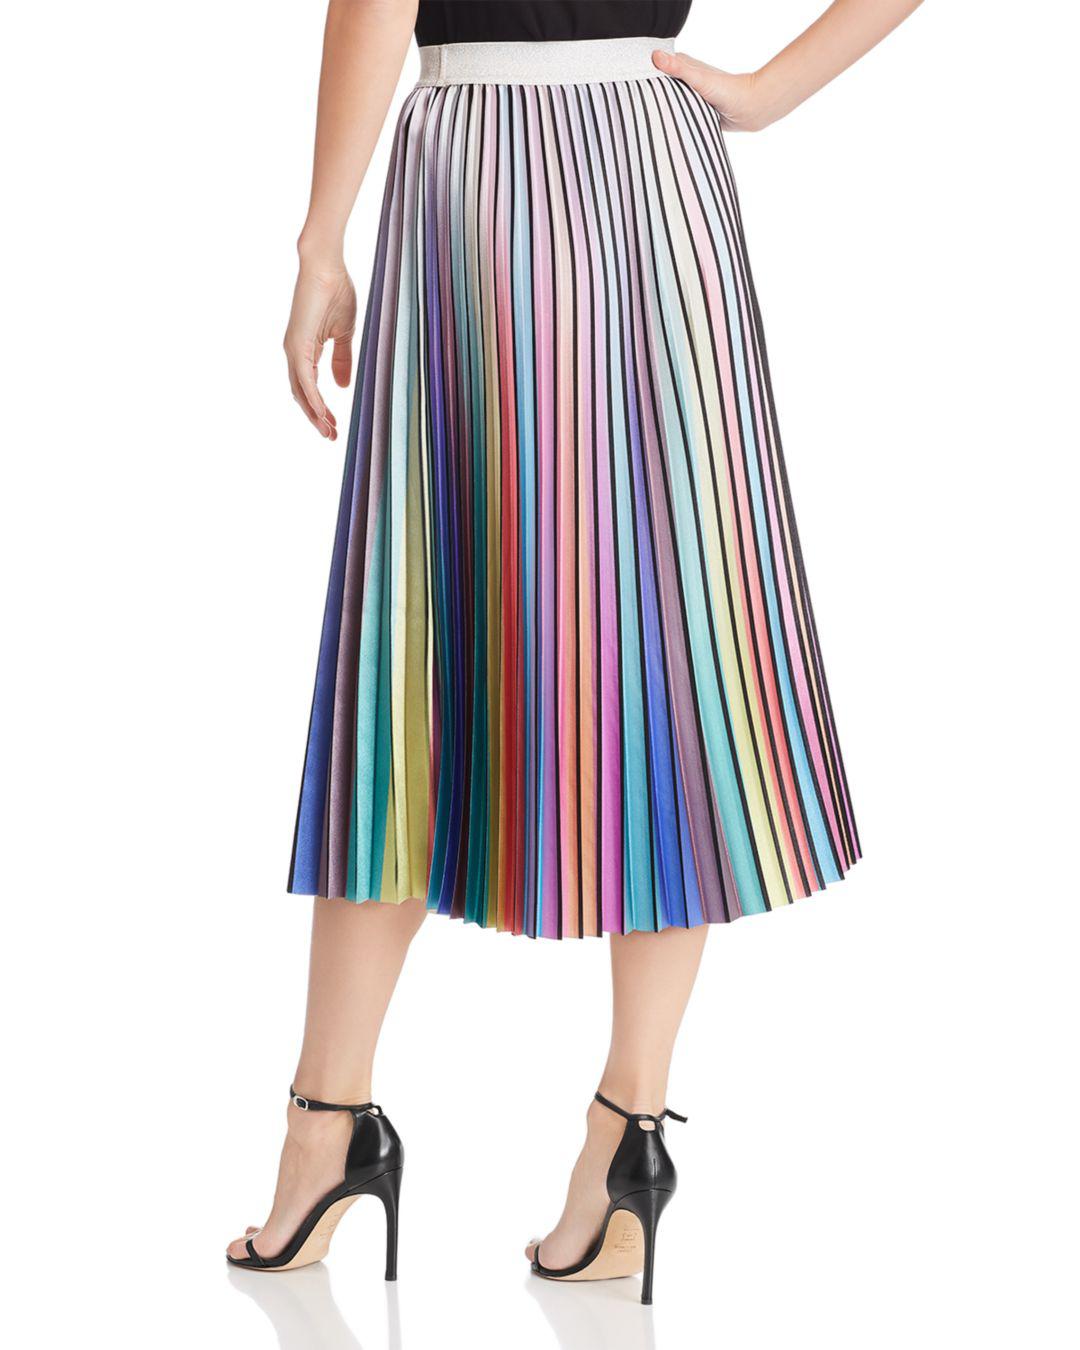 Lucy Paris Rainbow Pleated Midi Skirt in Blue - Lyst